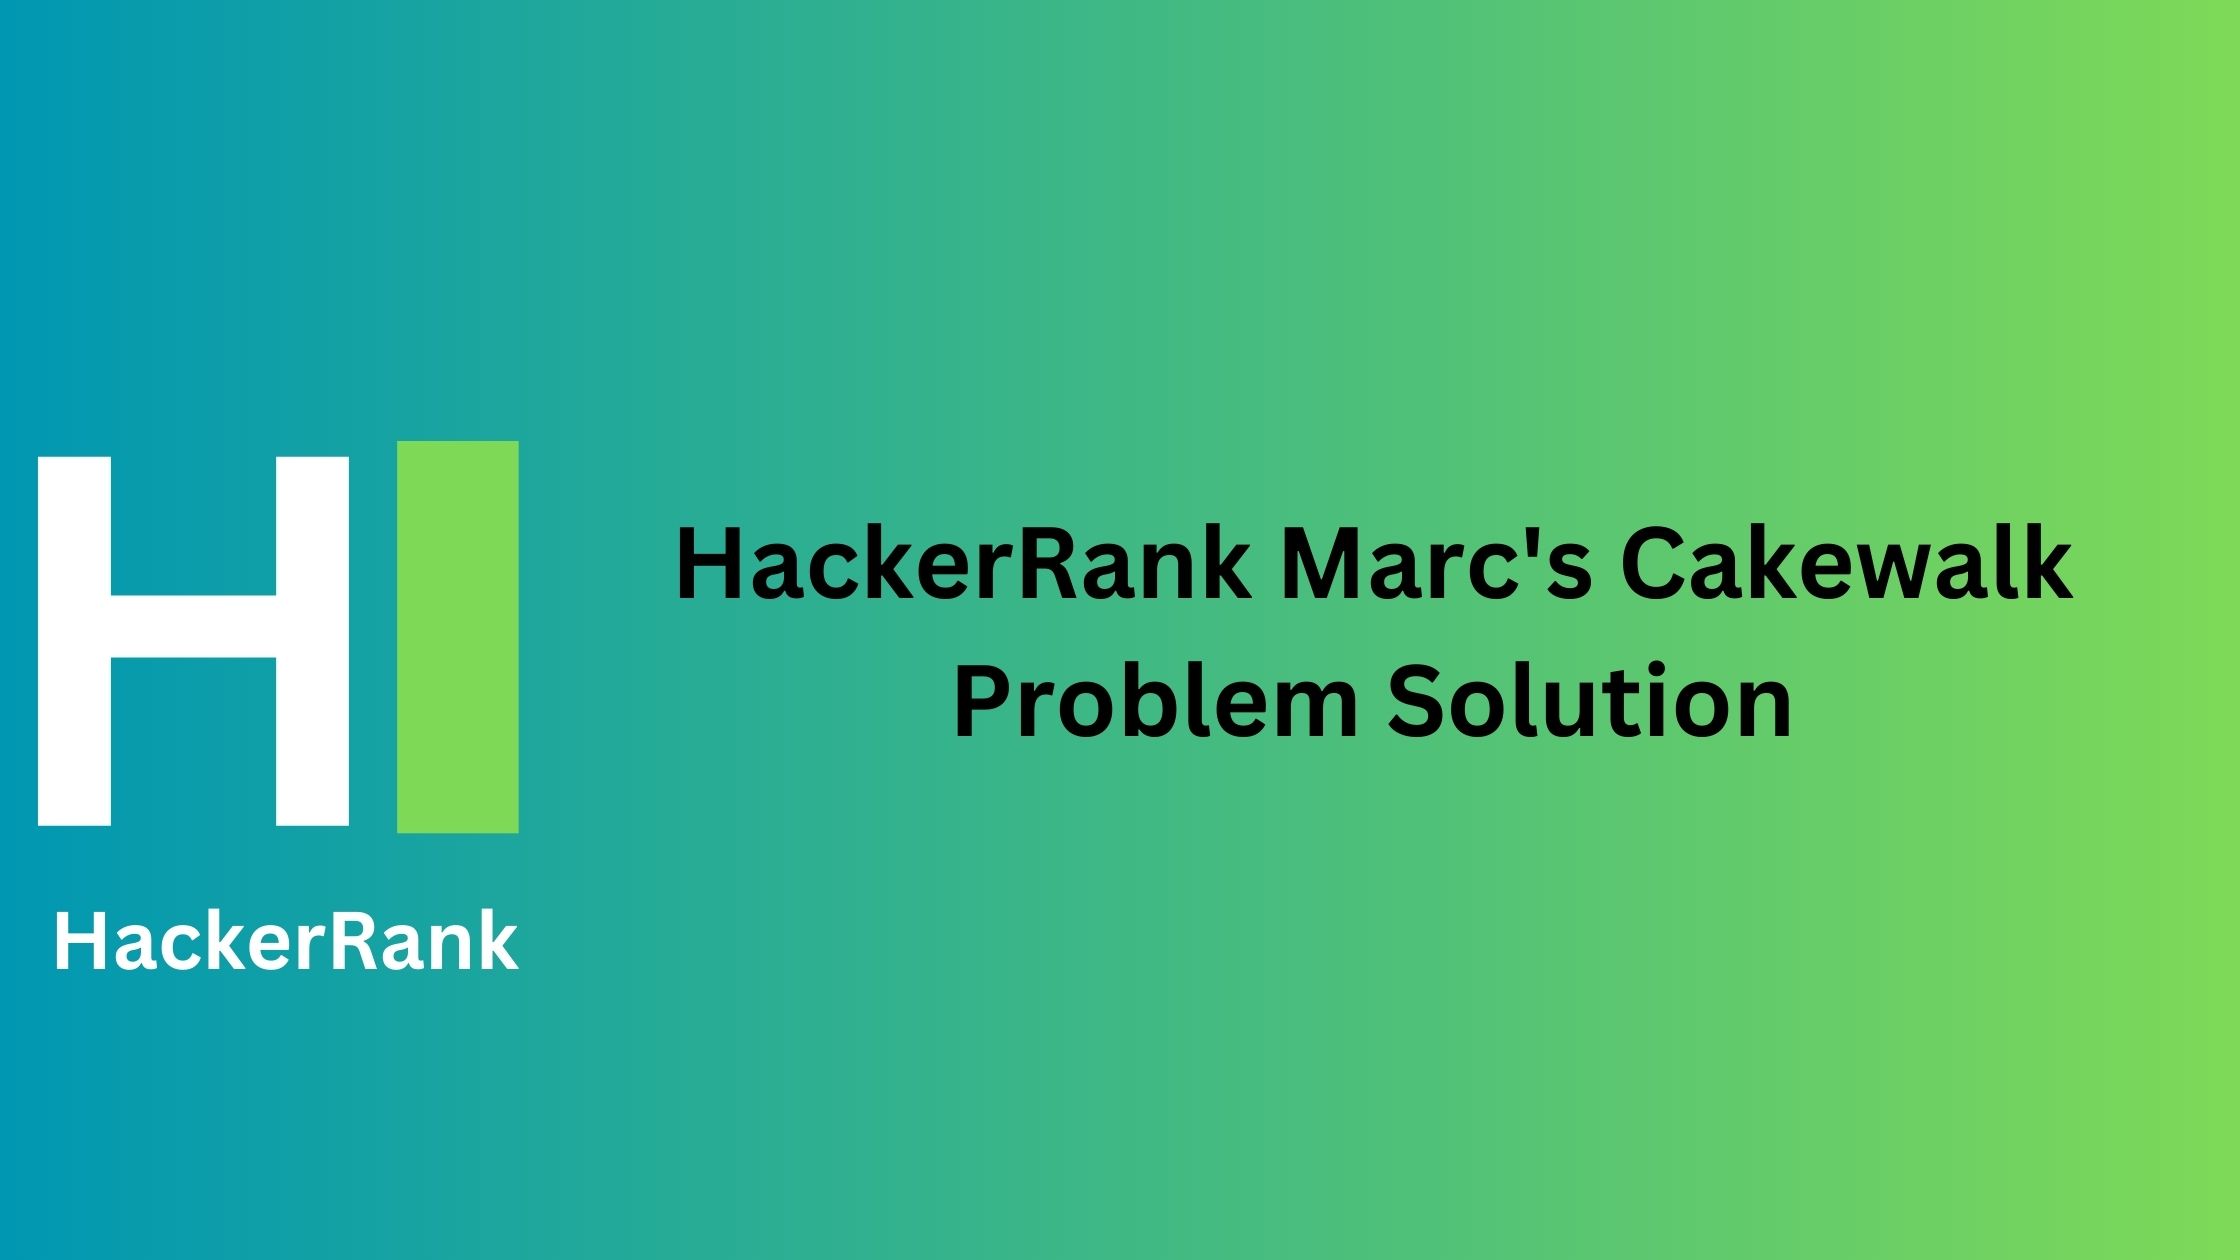 HackerRank Marc’s Cakewalk Problem Solution